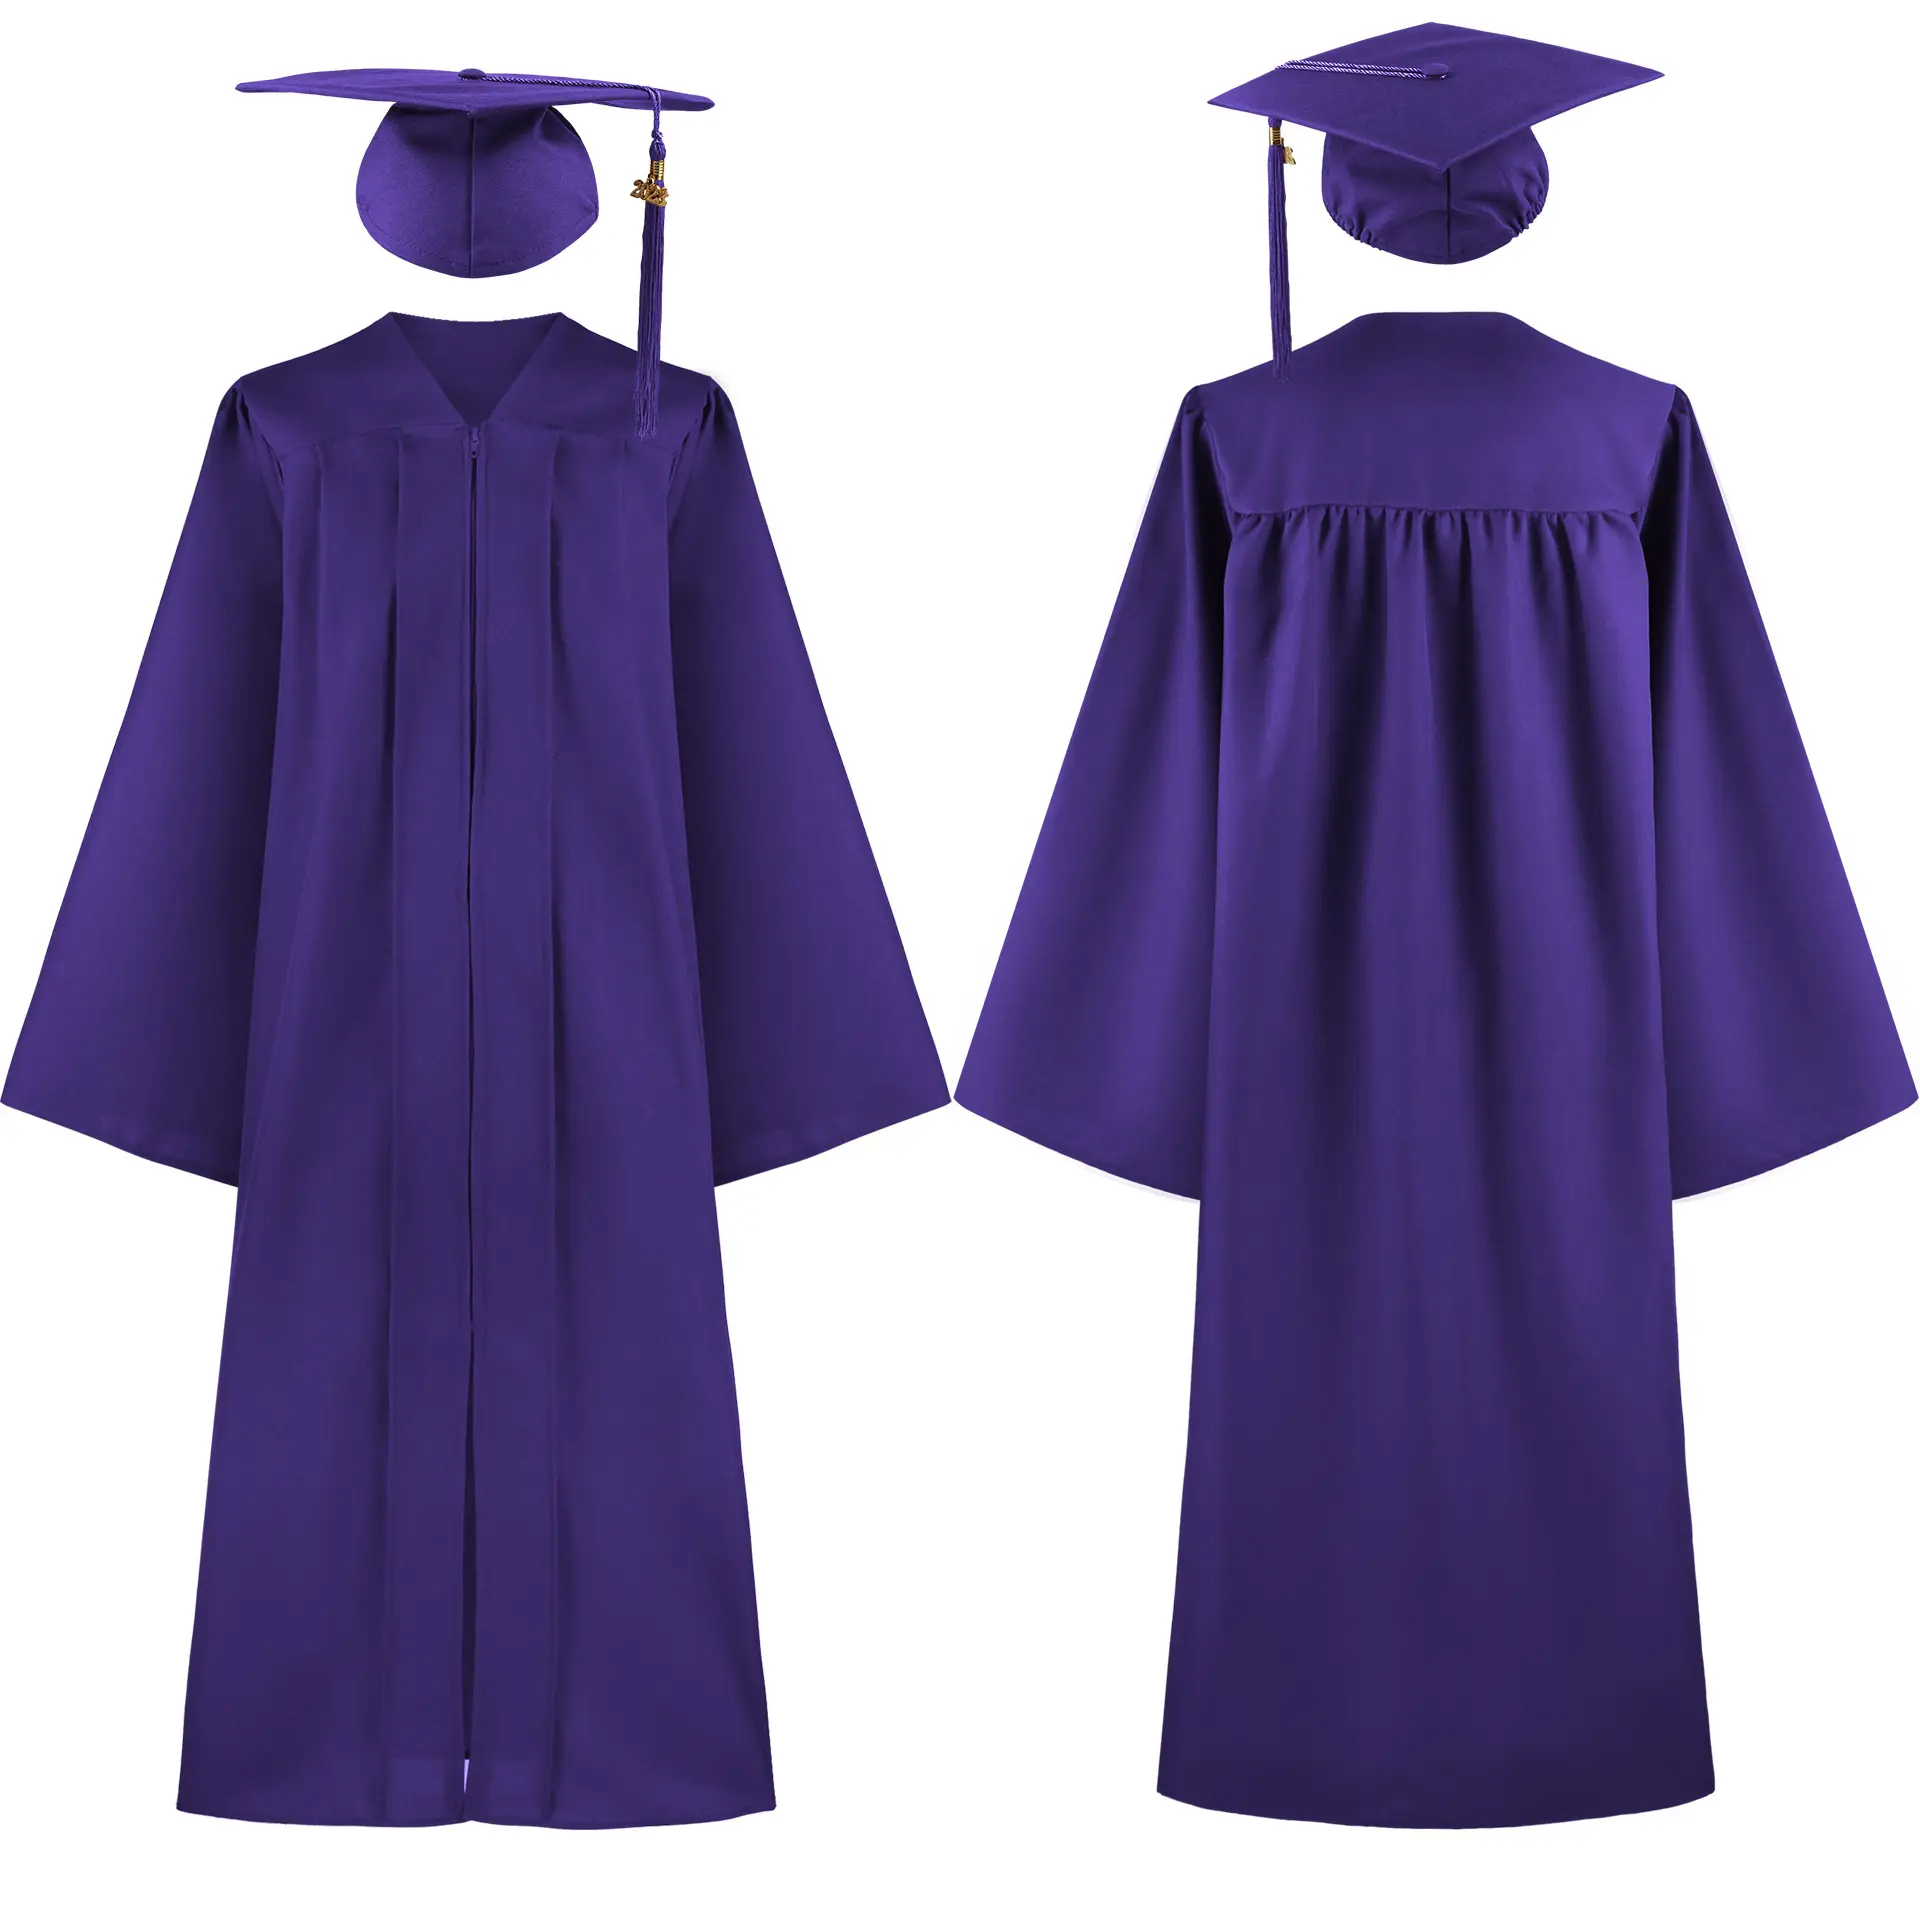 Bachelor's dress Adult graduation dress European and American high school college costume cosplay performance costume